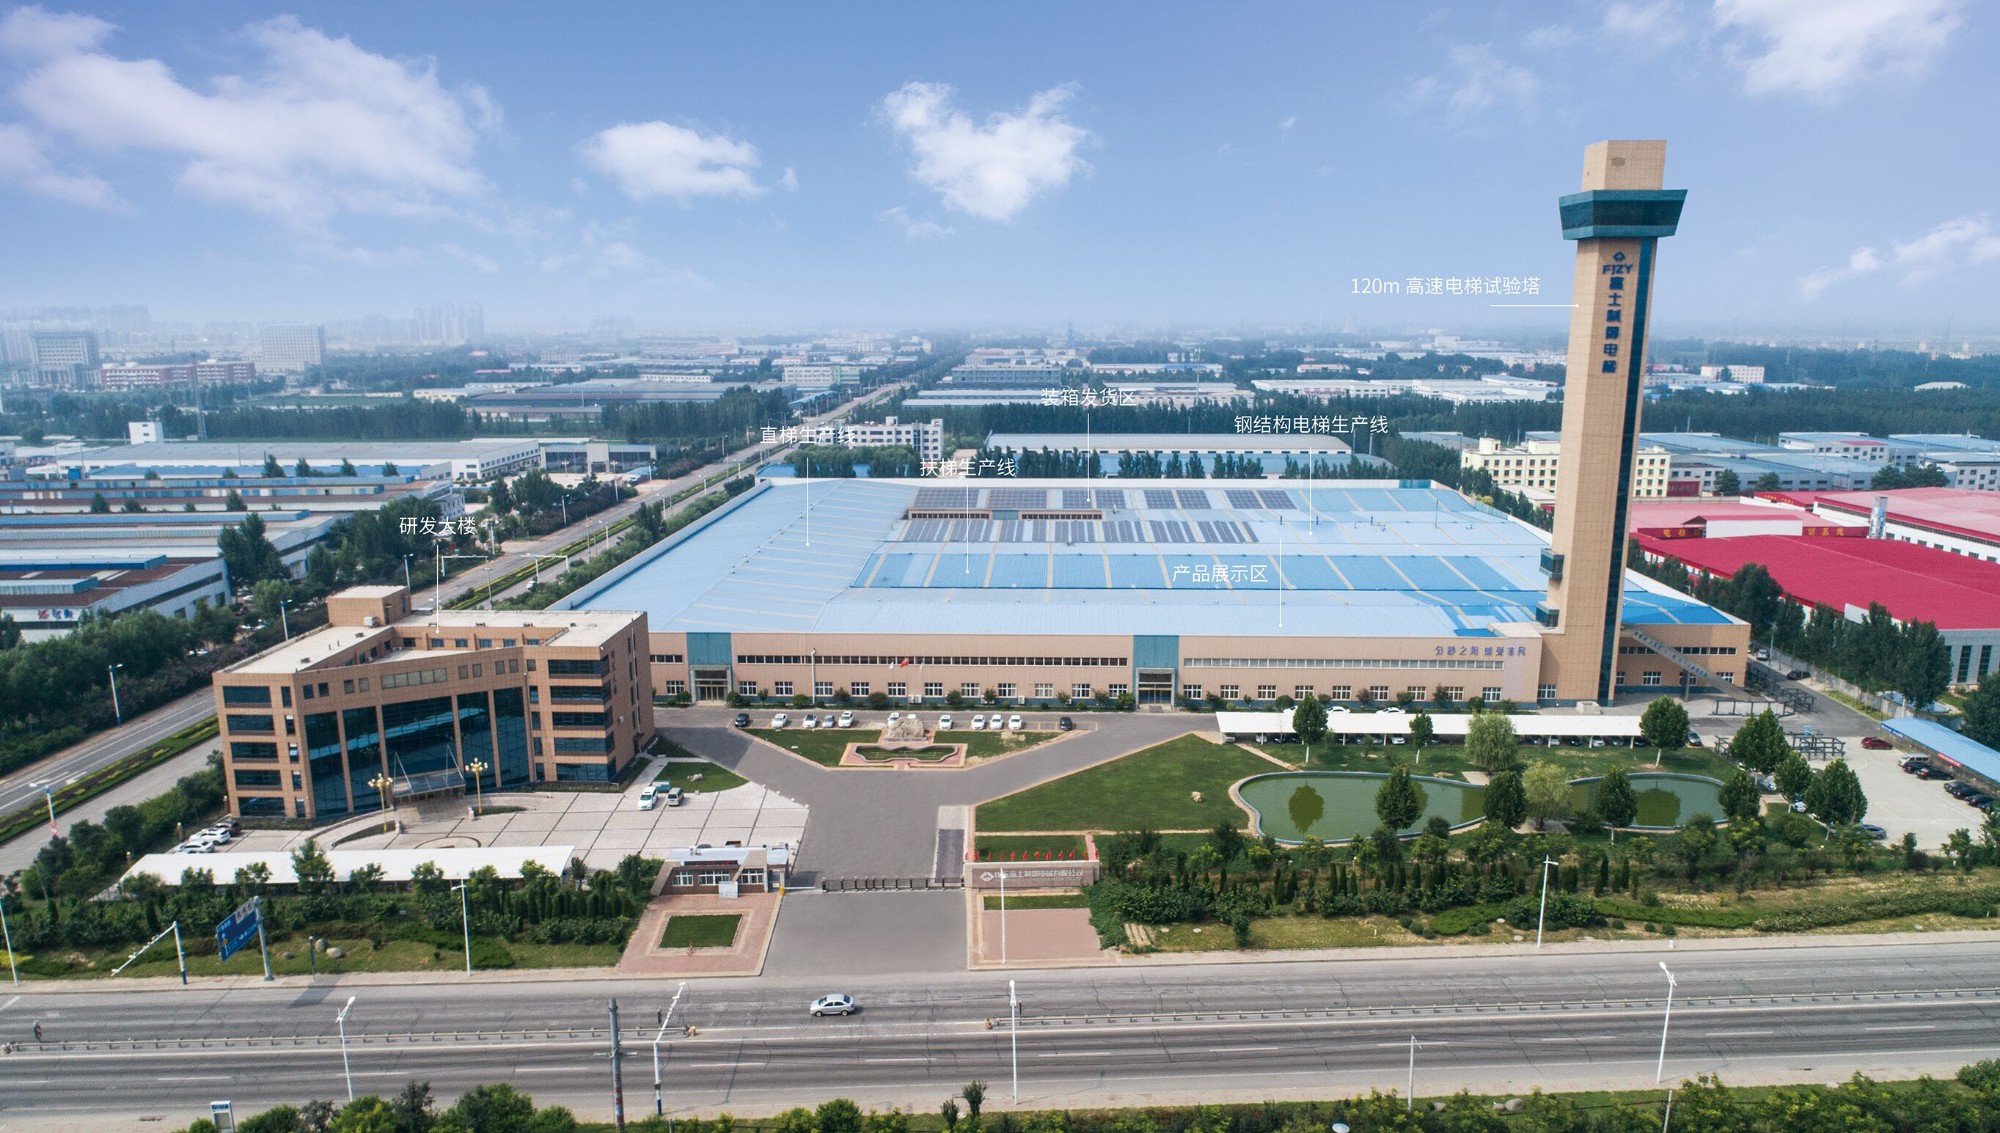 Shandong FUJIZY escalator project sells well in the international market